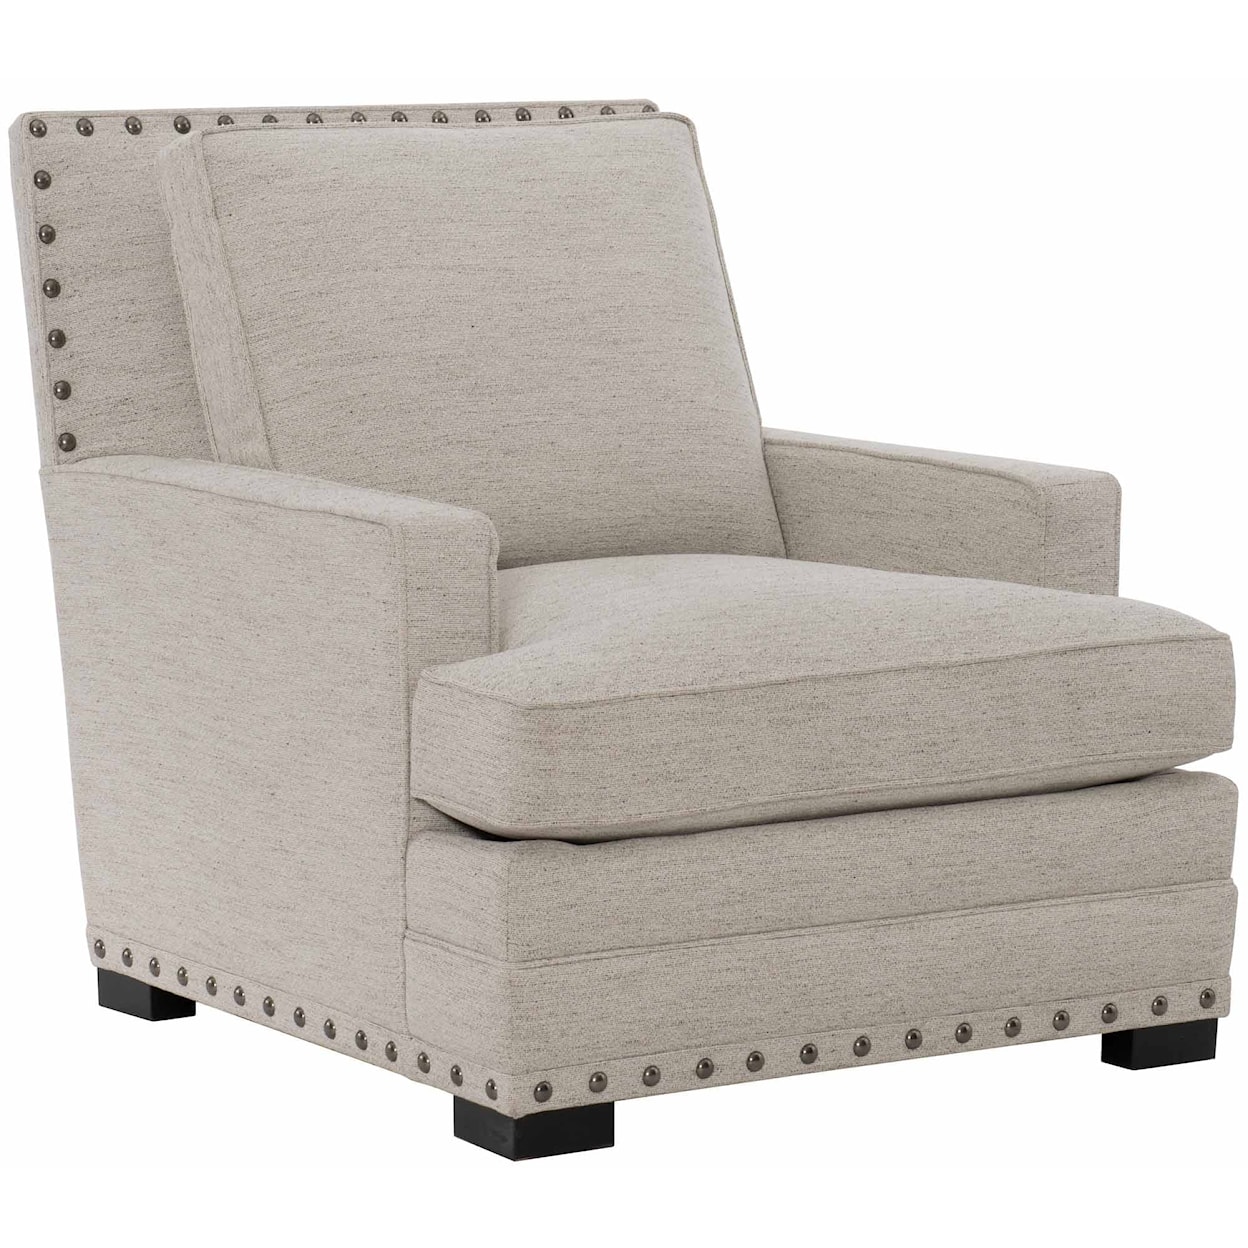 Bernhardt Cantor Cantor Fabric Chair